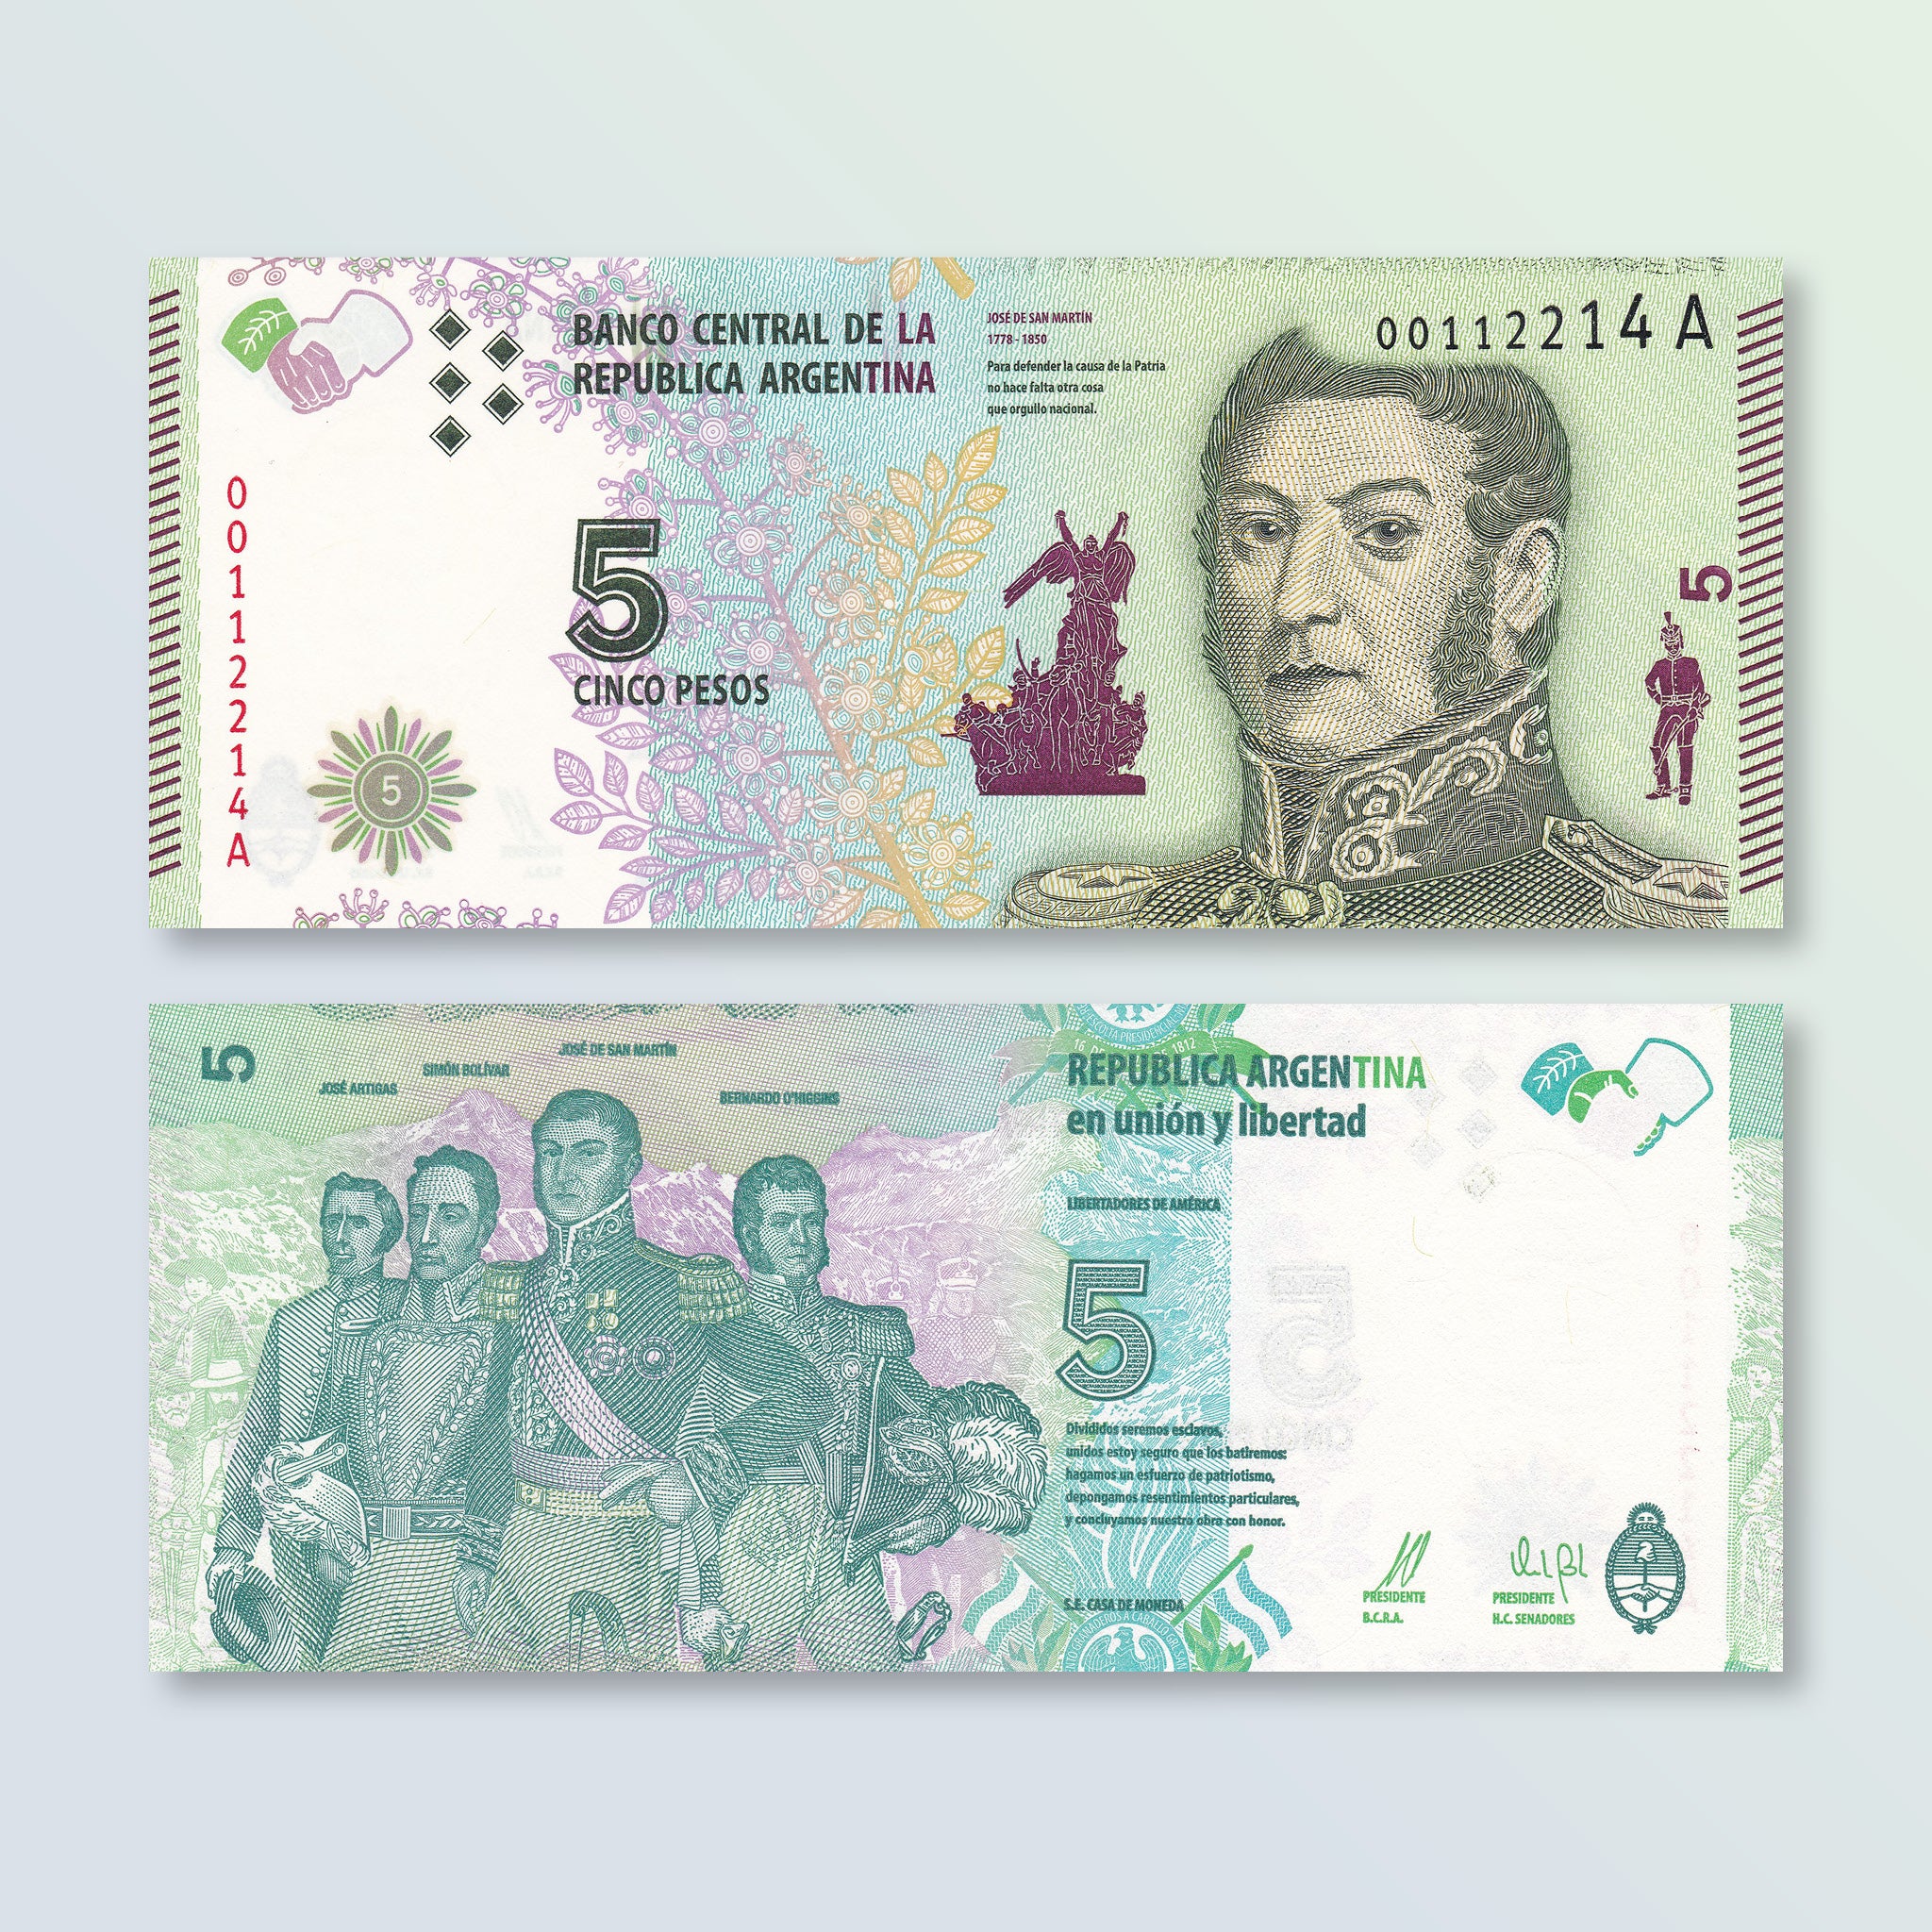 Argentina 5 Pesos, 2015, B415a, P359, UNC - Robert's World Money - World Banknotes